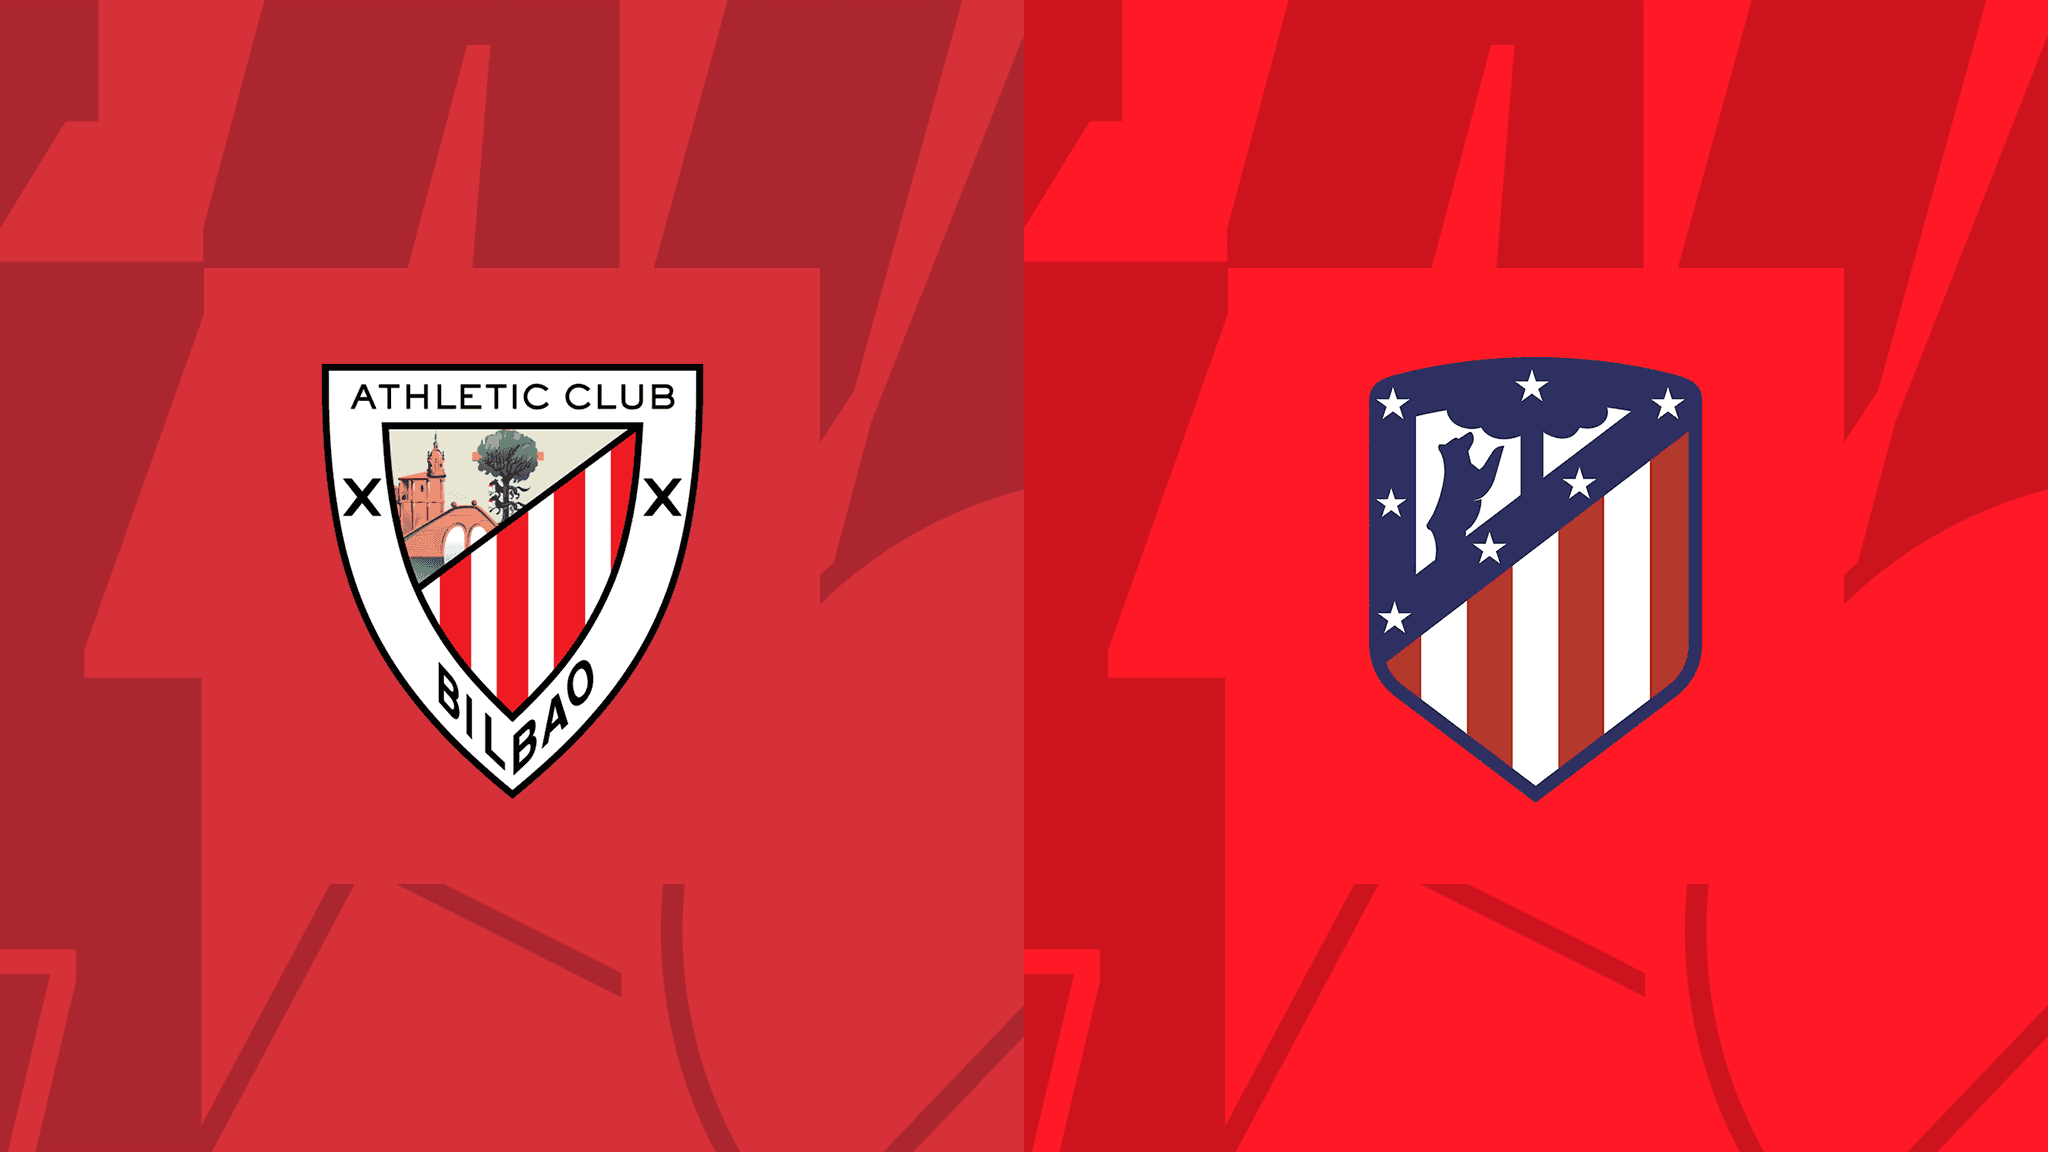  مشاهدة مباراة أتلتيكو مدريد و أتلتيك بيلباو بث مباشر 15/10/2022 Athletic Club vs Atlético Madrid